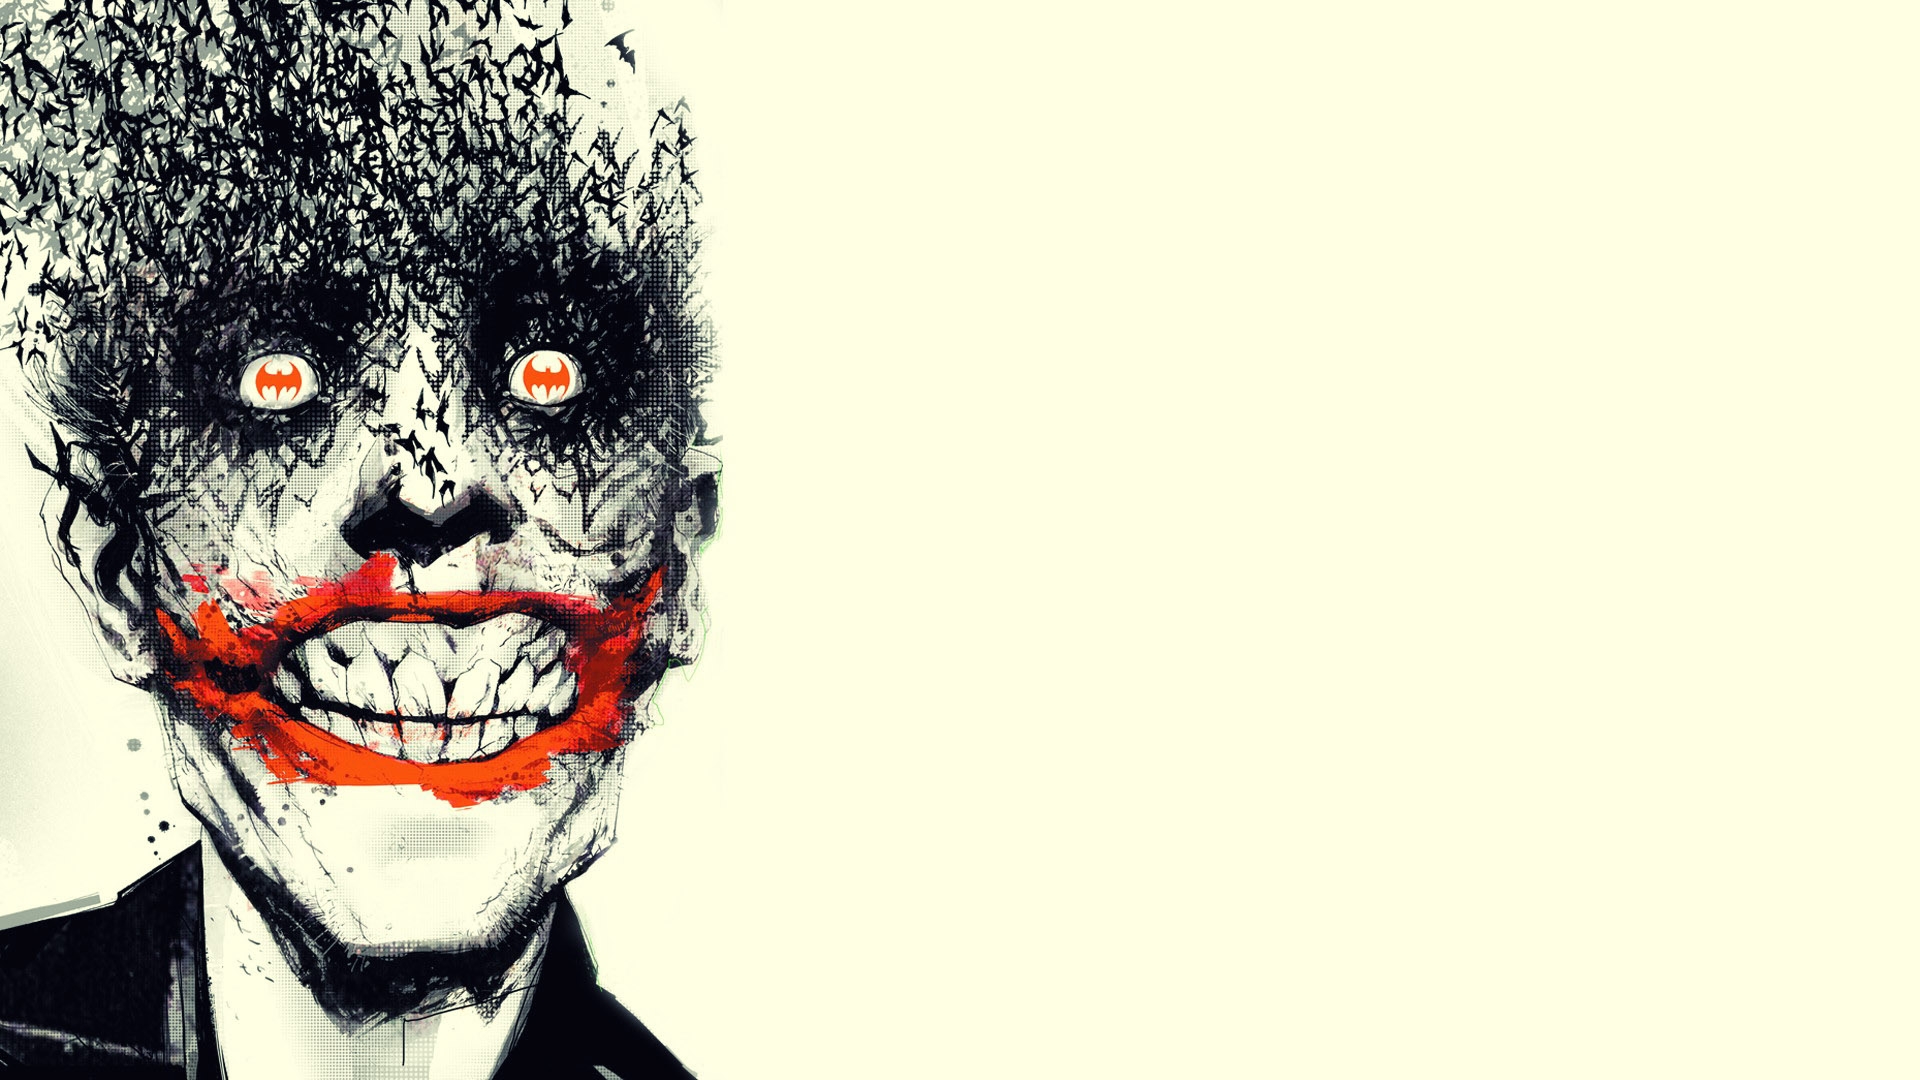 comics_batman_joker_dark_horror_clowns_1920x1080.jpg